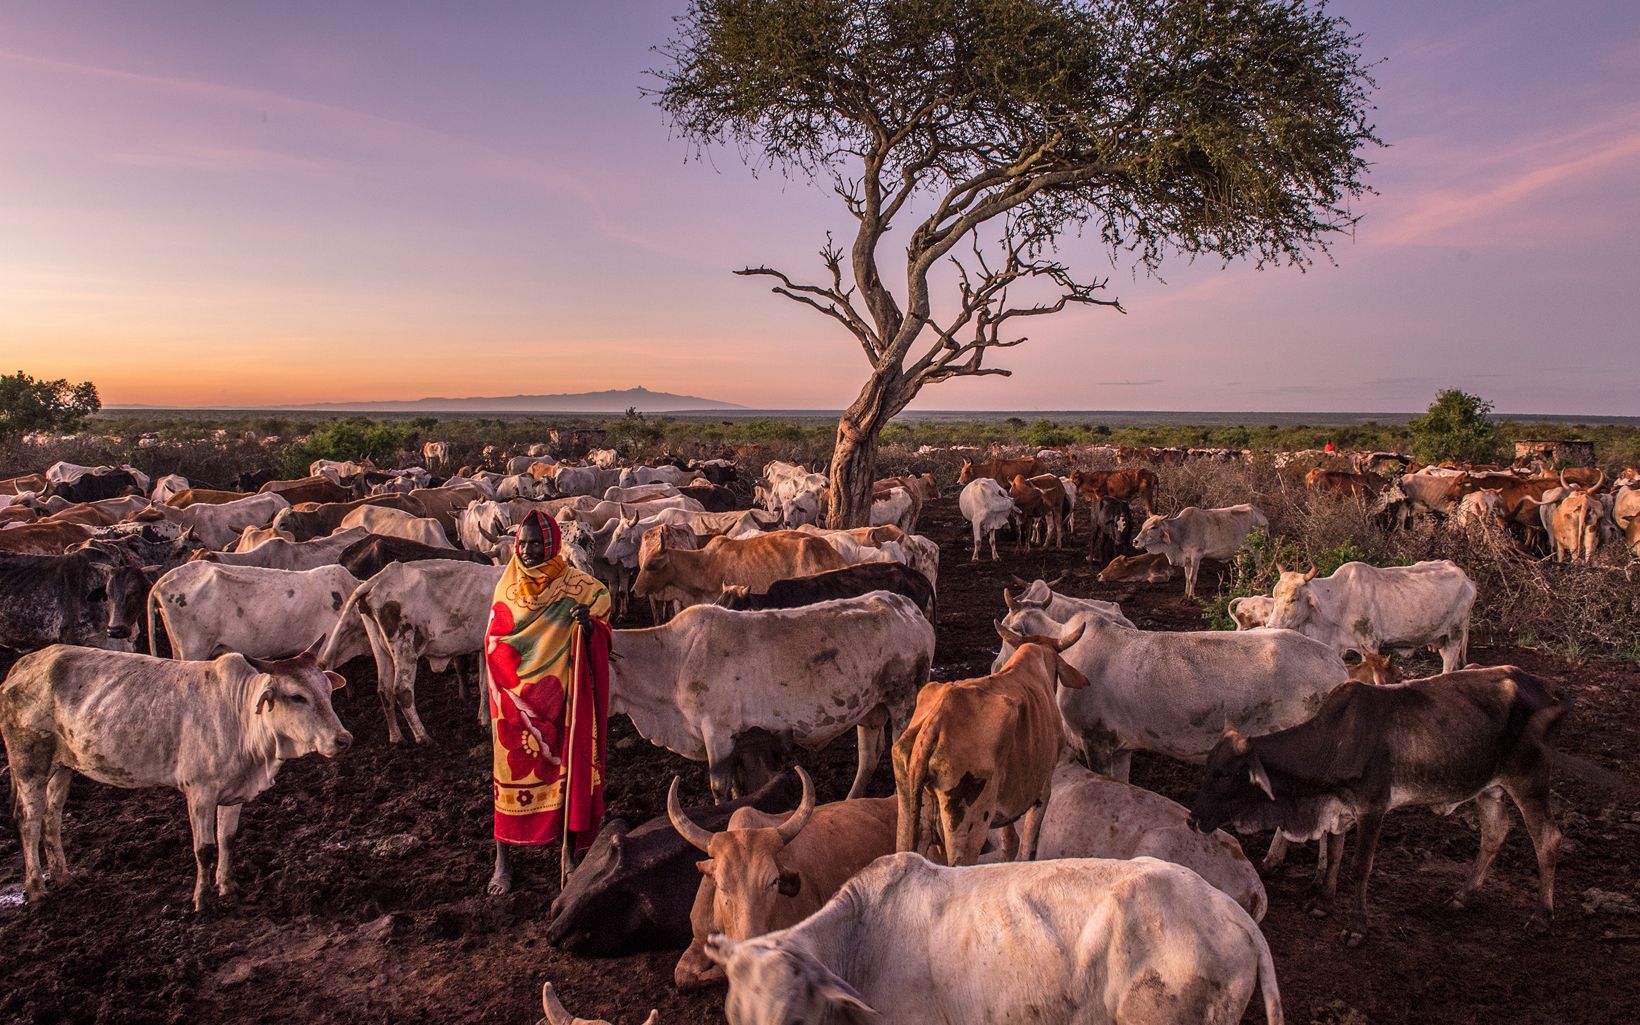 In the field Sakakei Naiptari prepares to milk his cows at Loisaba Conservancy. © Ami Vitale